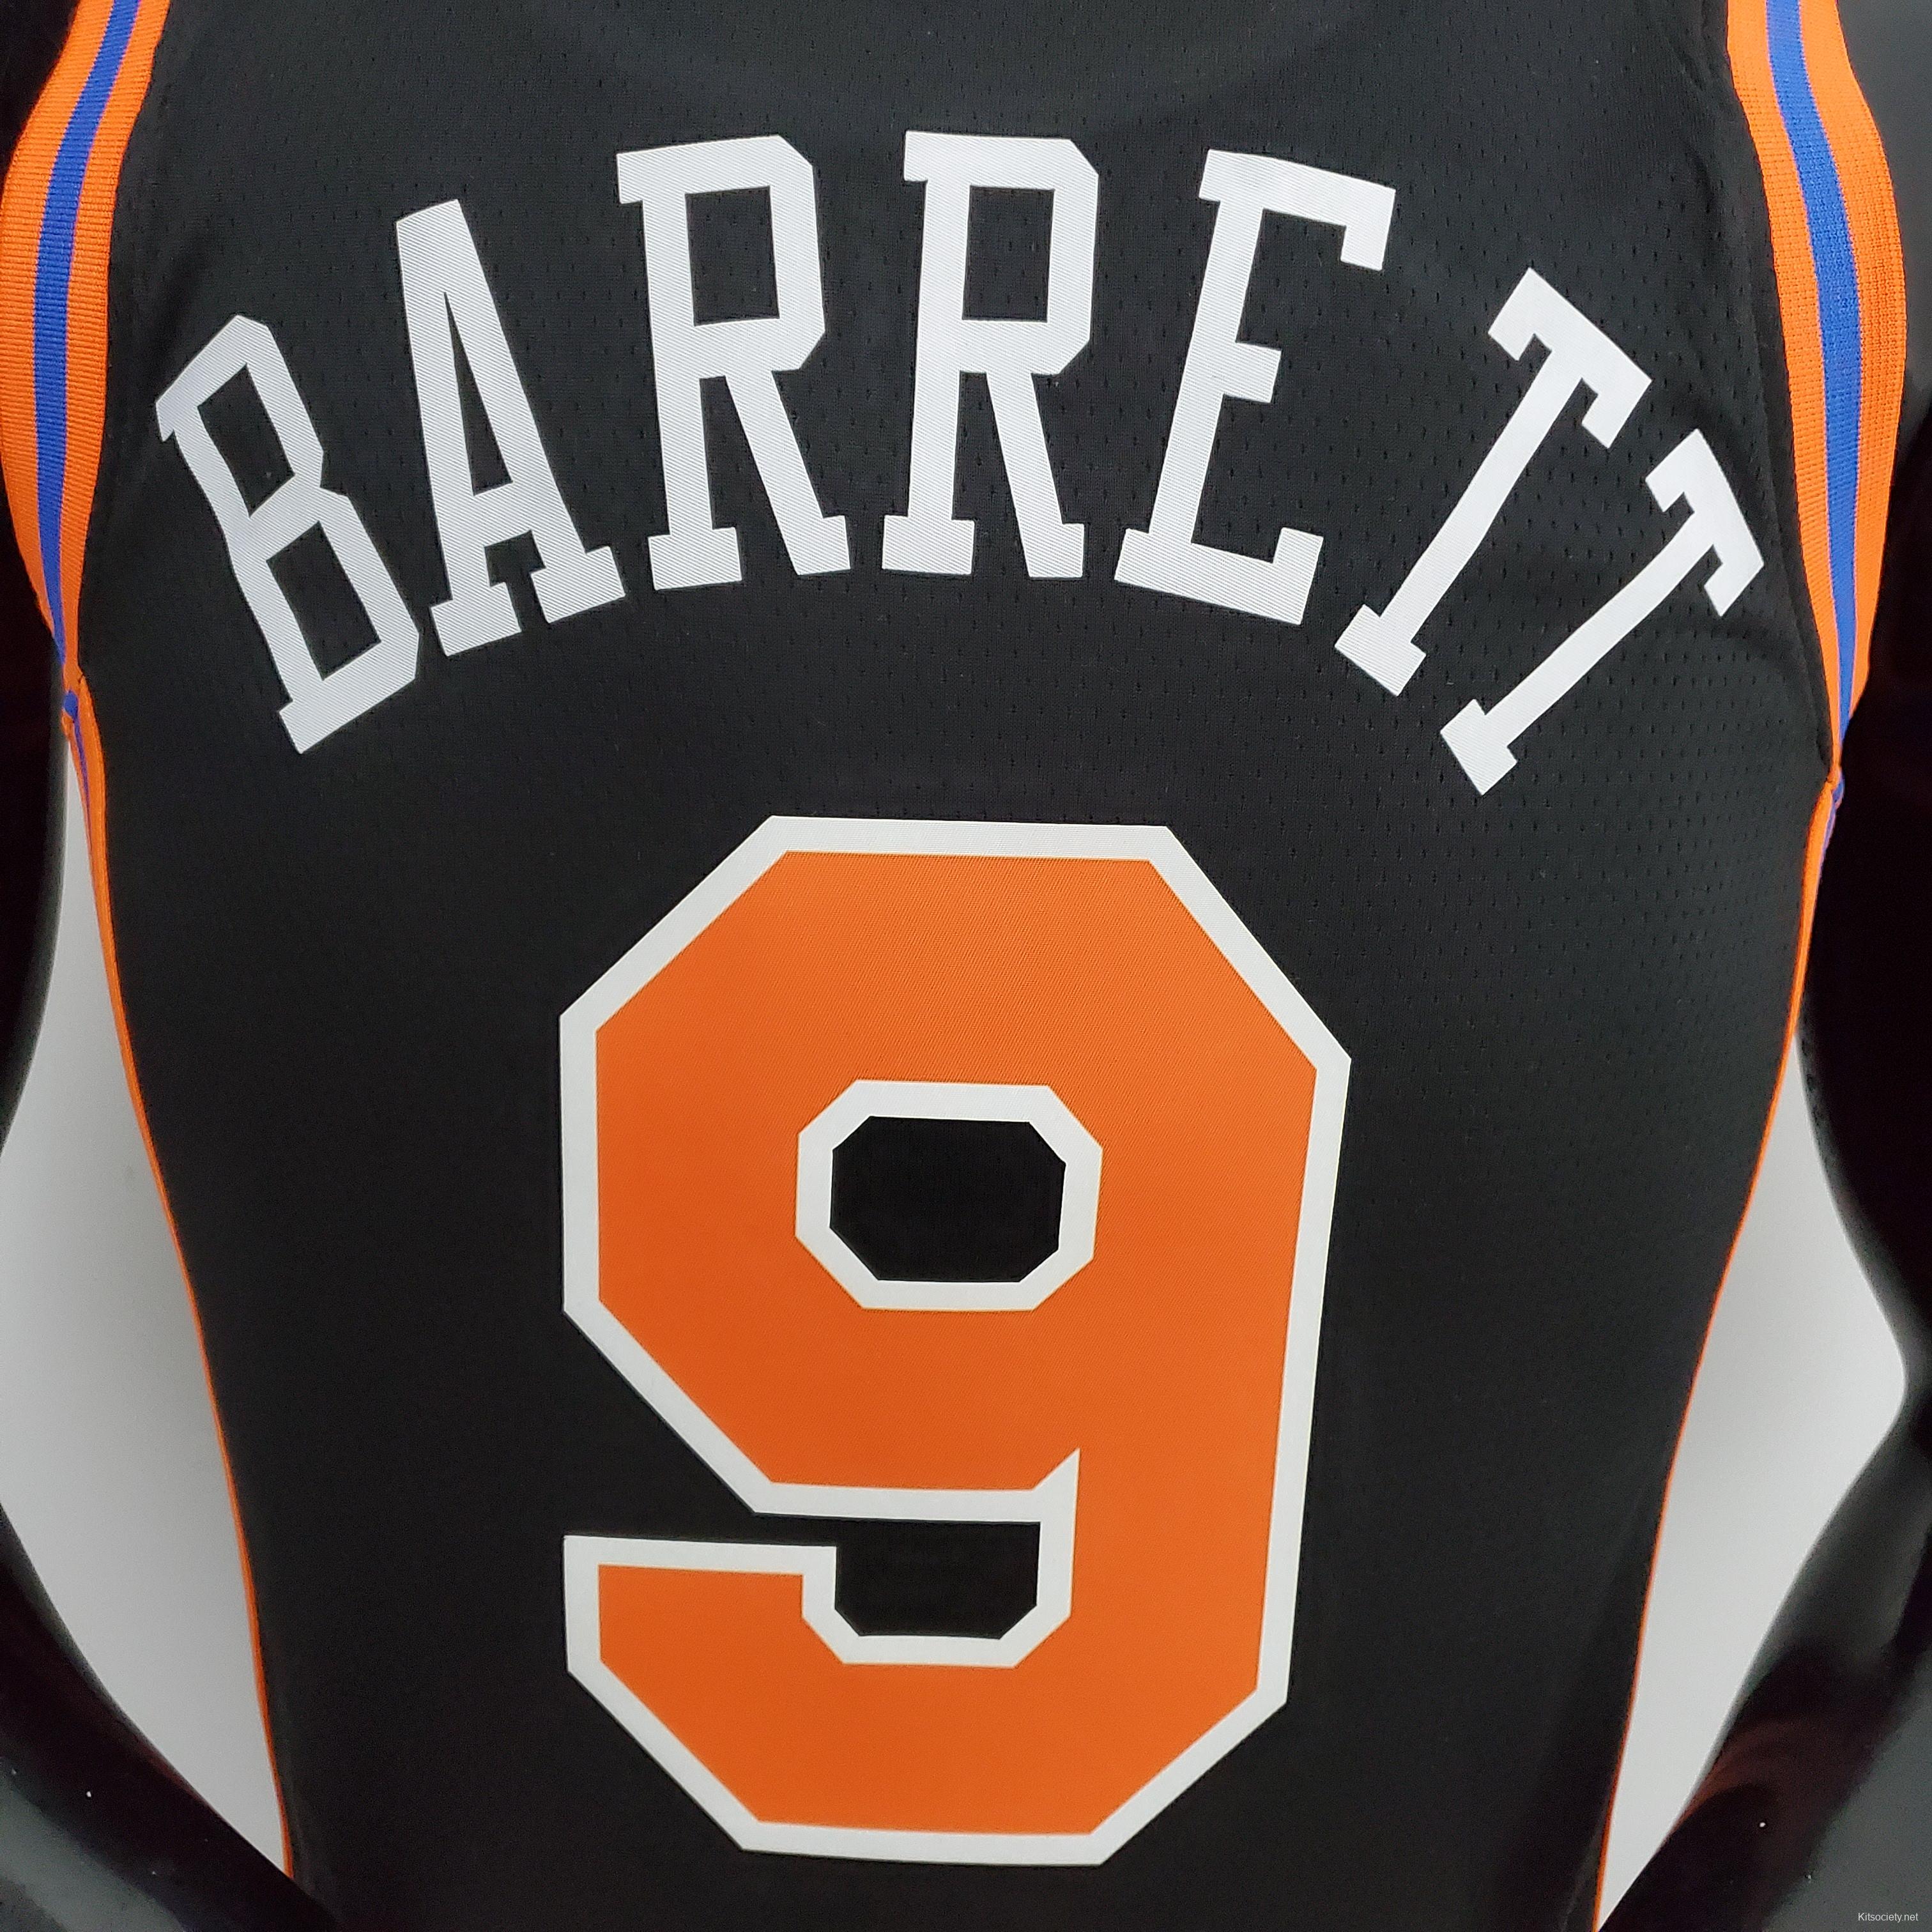 RJ Barrett - New York Knicks - Kia NBA Tip-Off 2022 - Game-Worn Icon  Edition Jersey - 2022-23 NBA Season